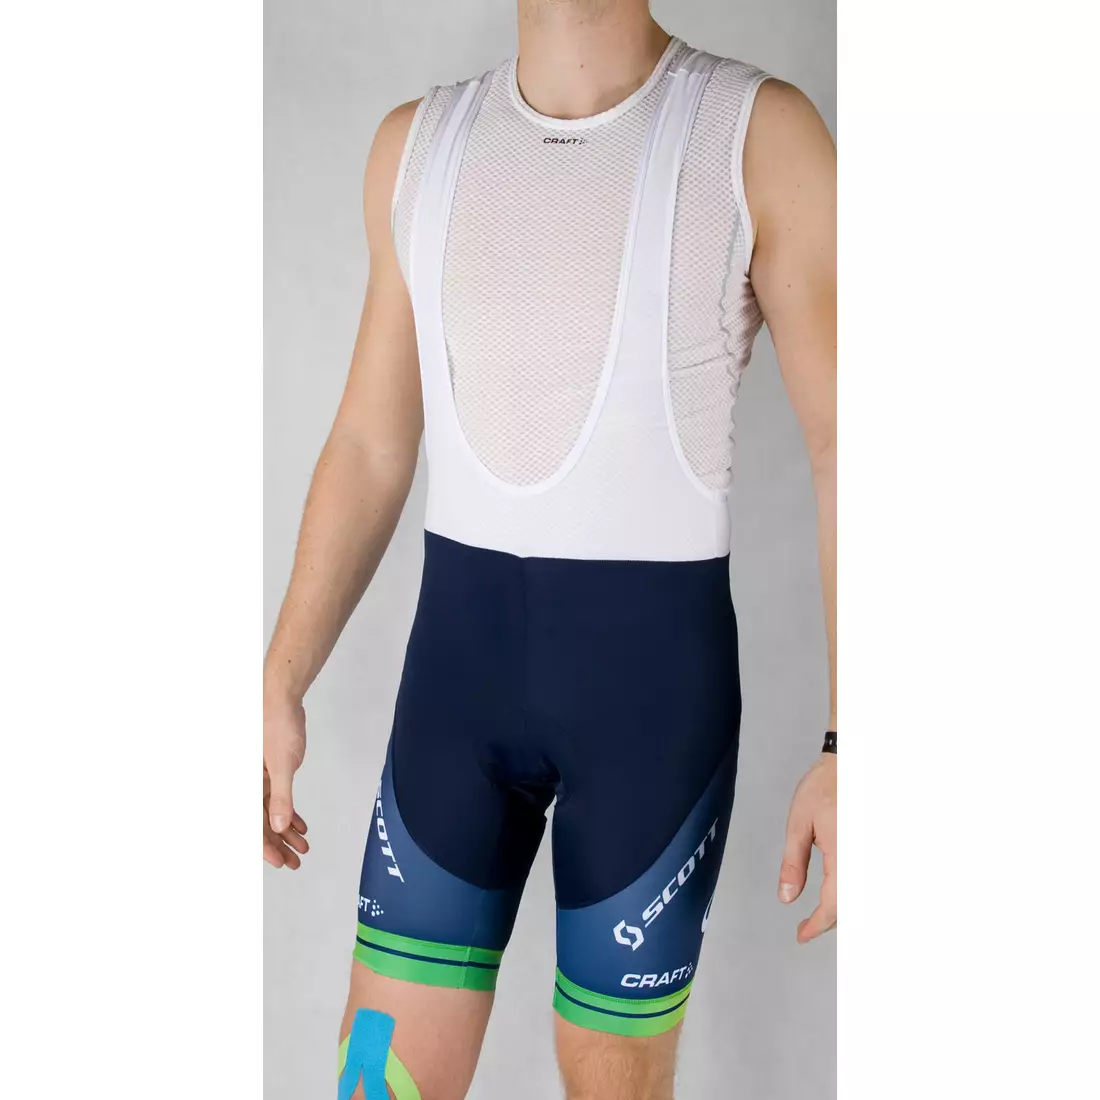 CRAFT ORICA GREEN EDGE cycling shorts 1903923-2900